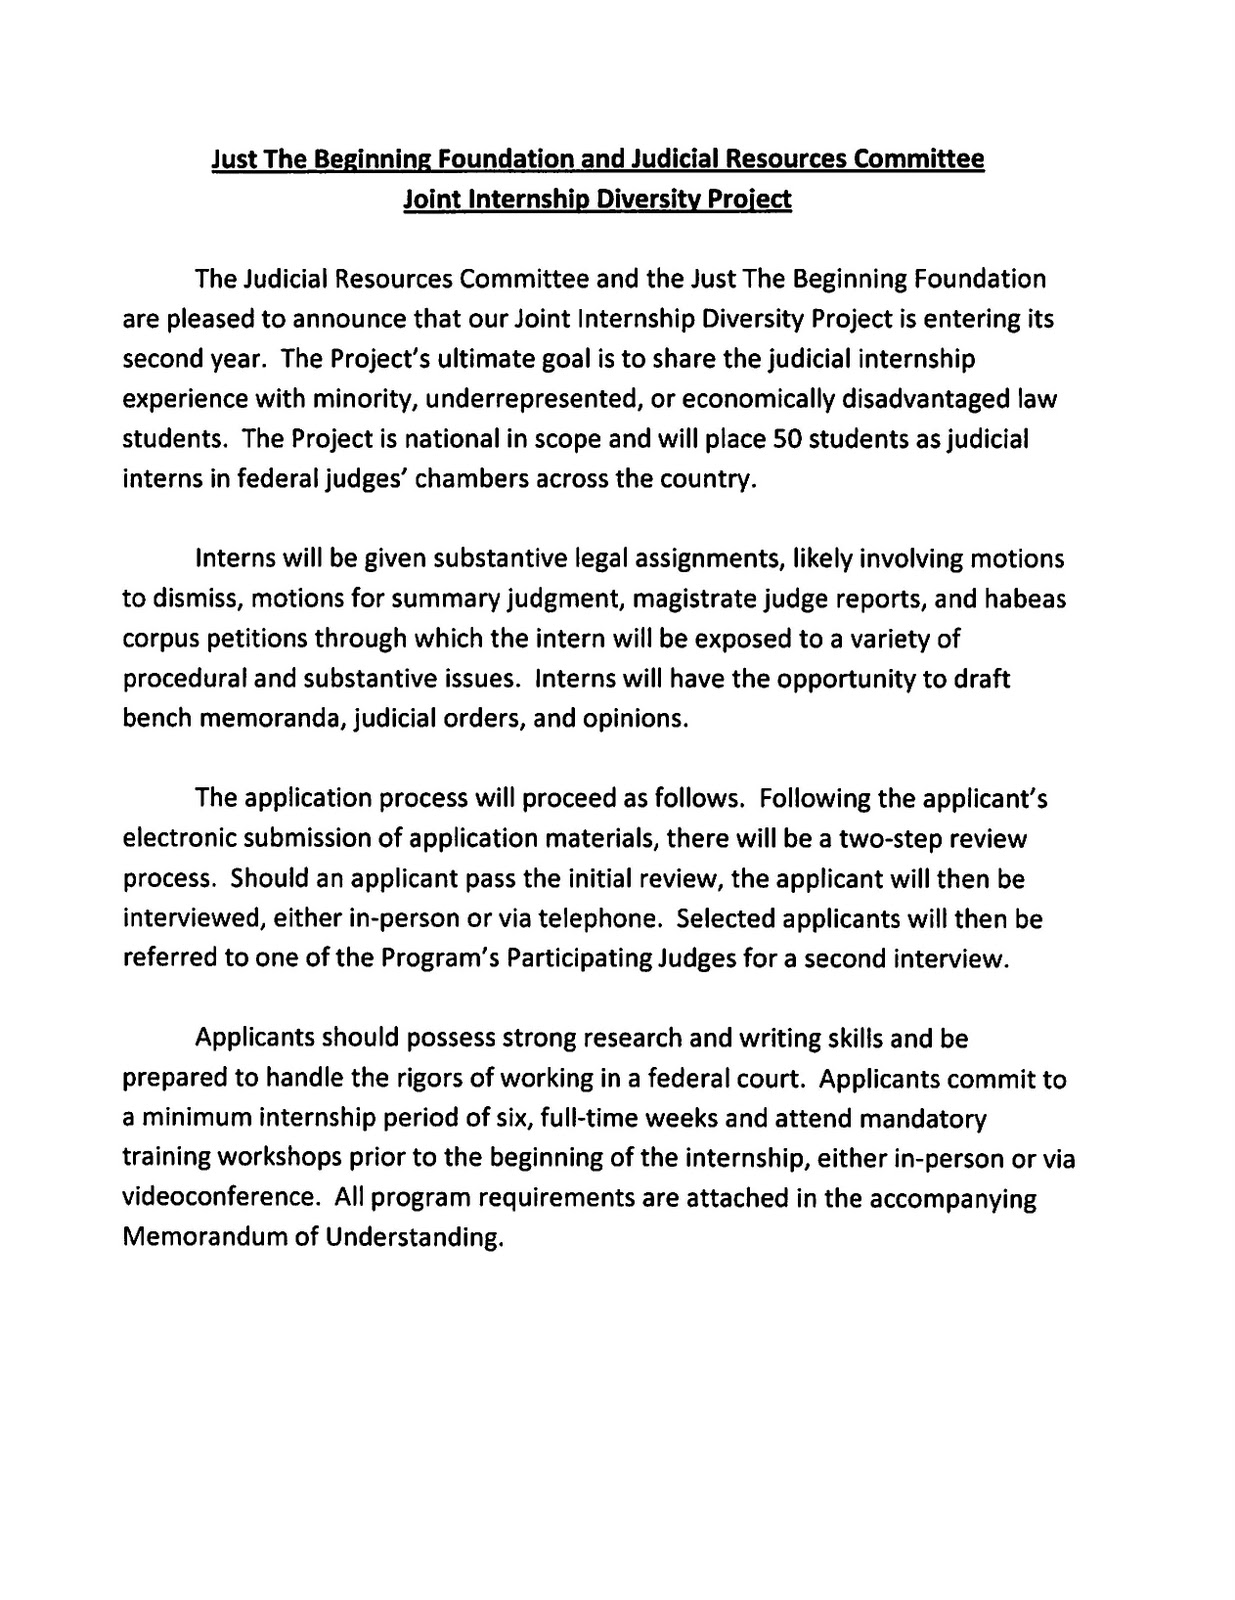 International law internship cover letter